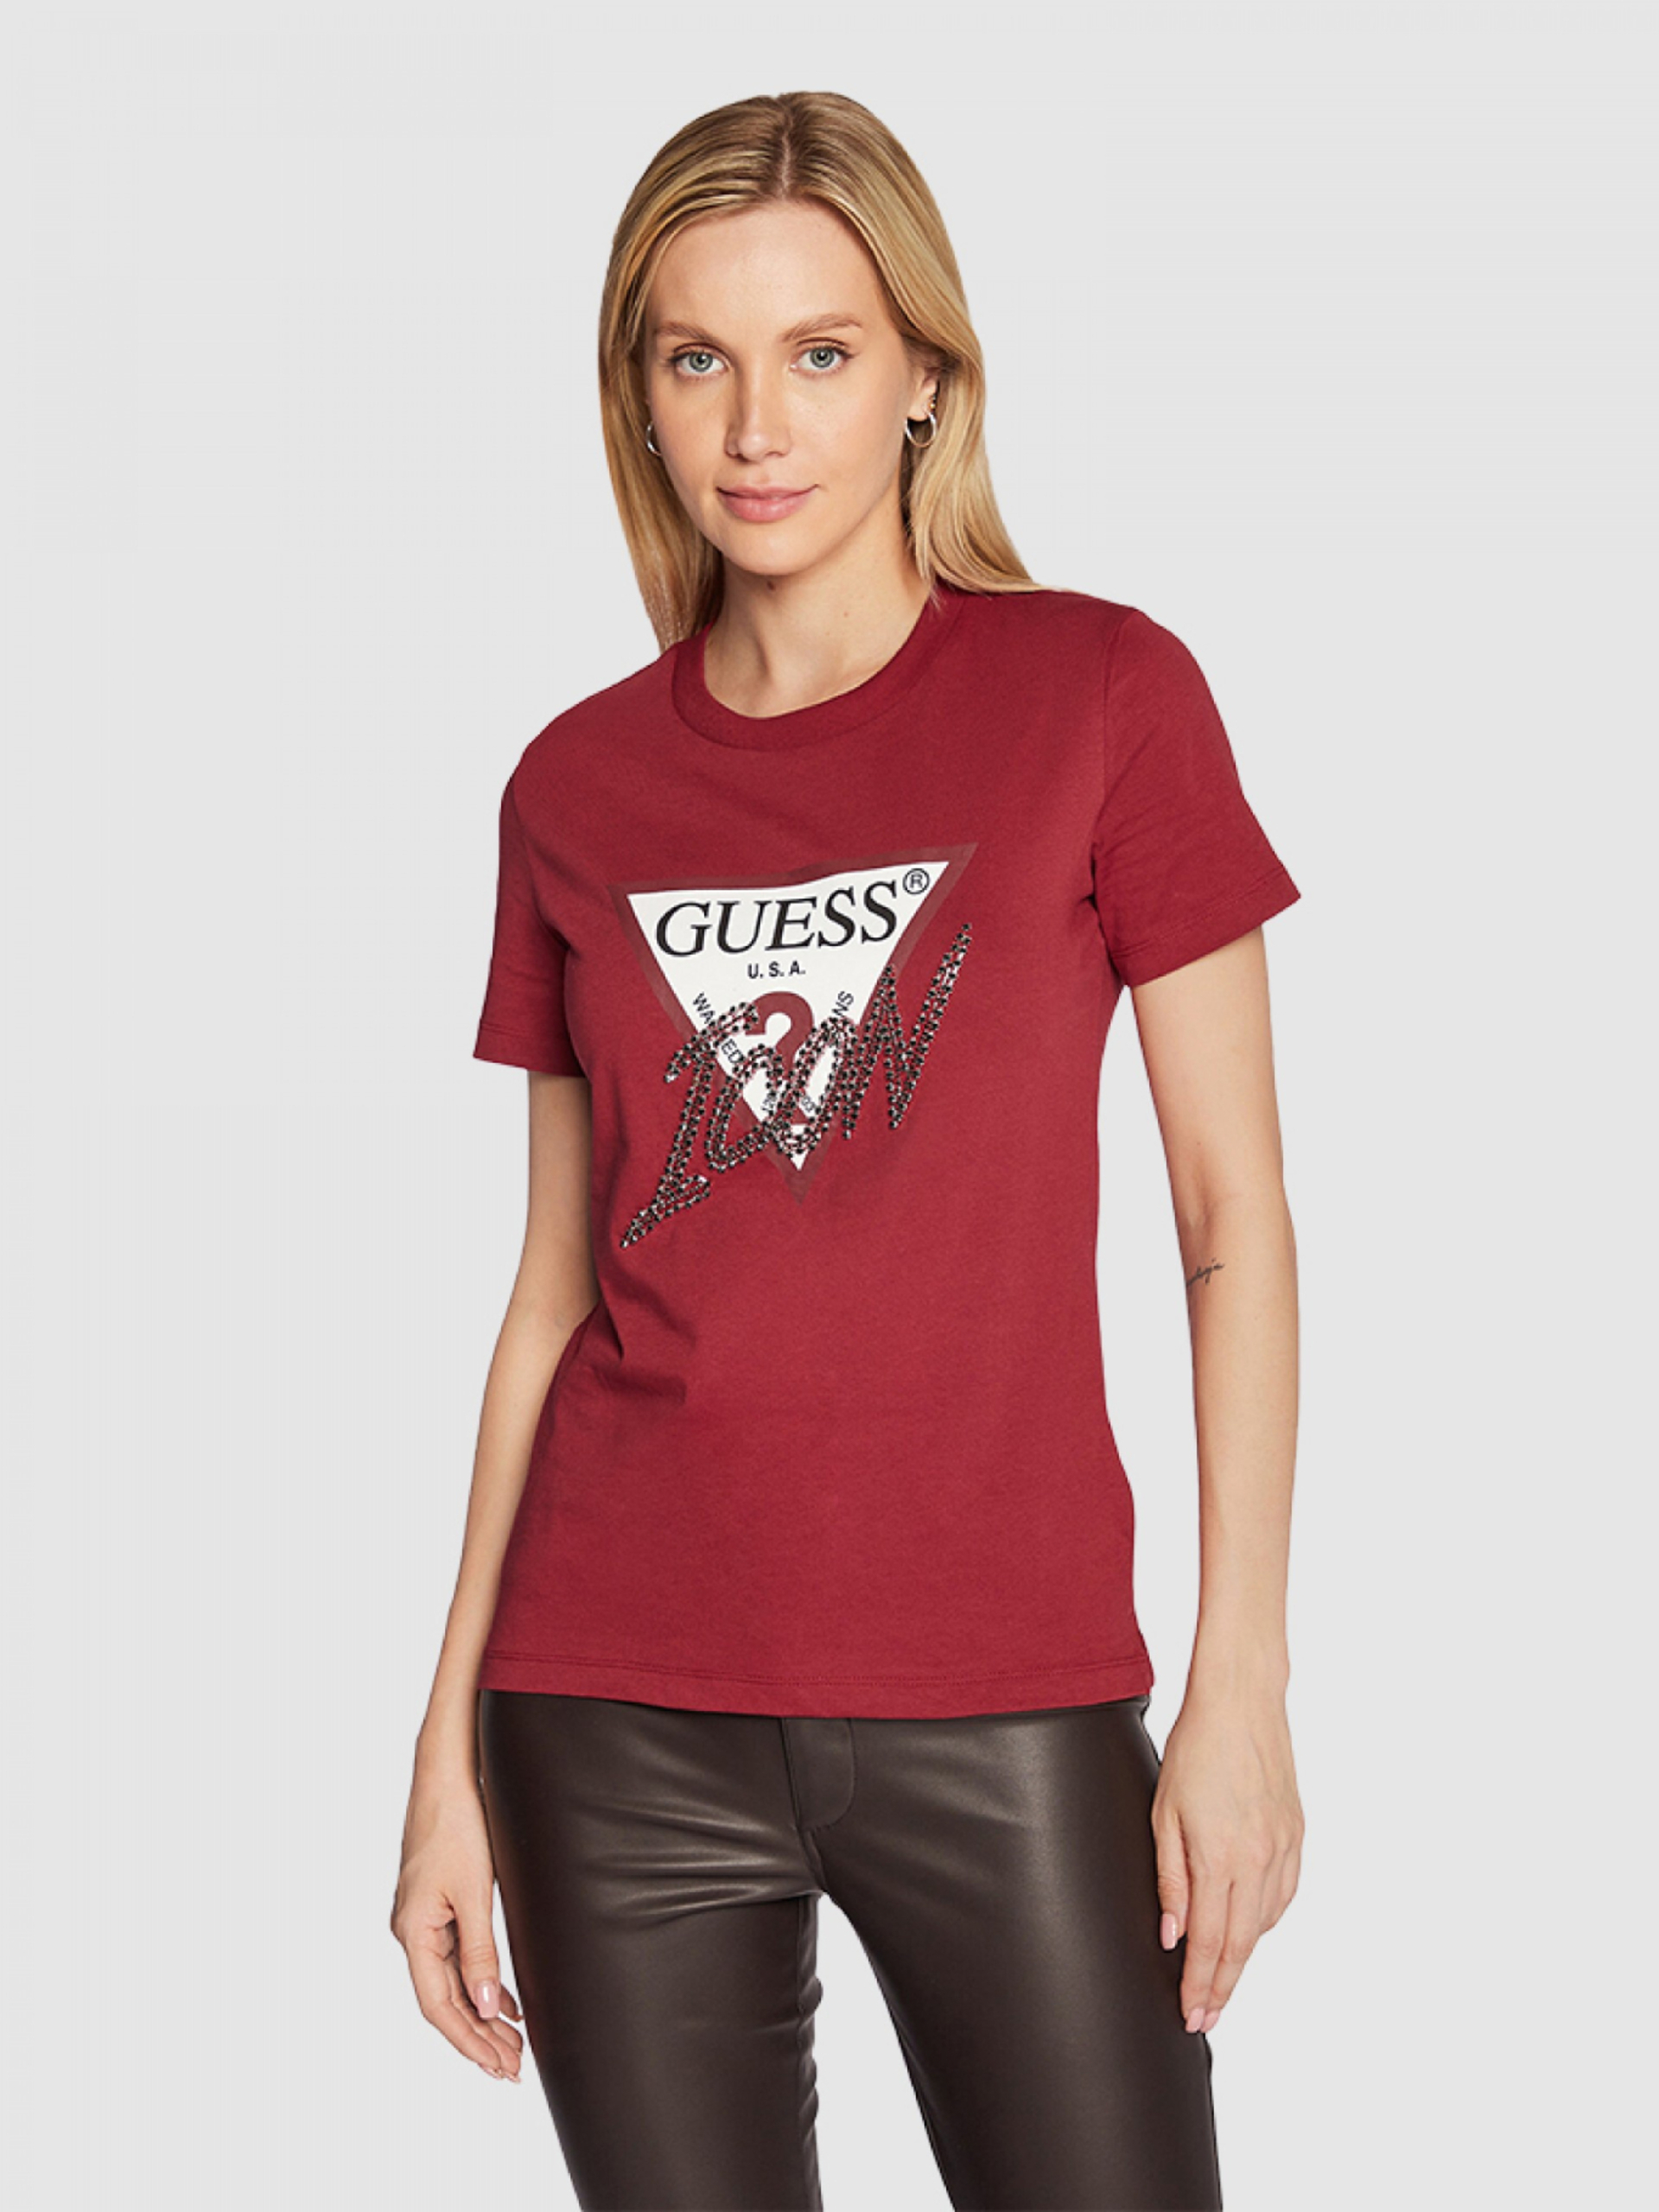 Guess dámské vínové tričko - M (G5B7)